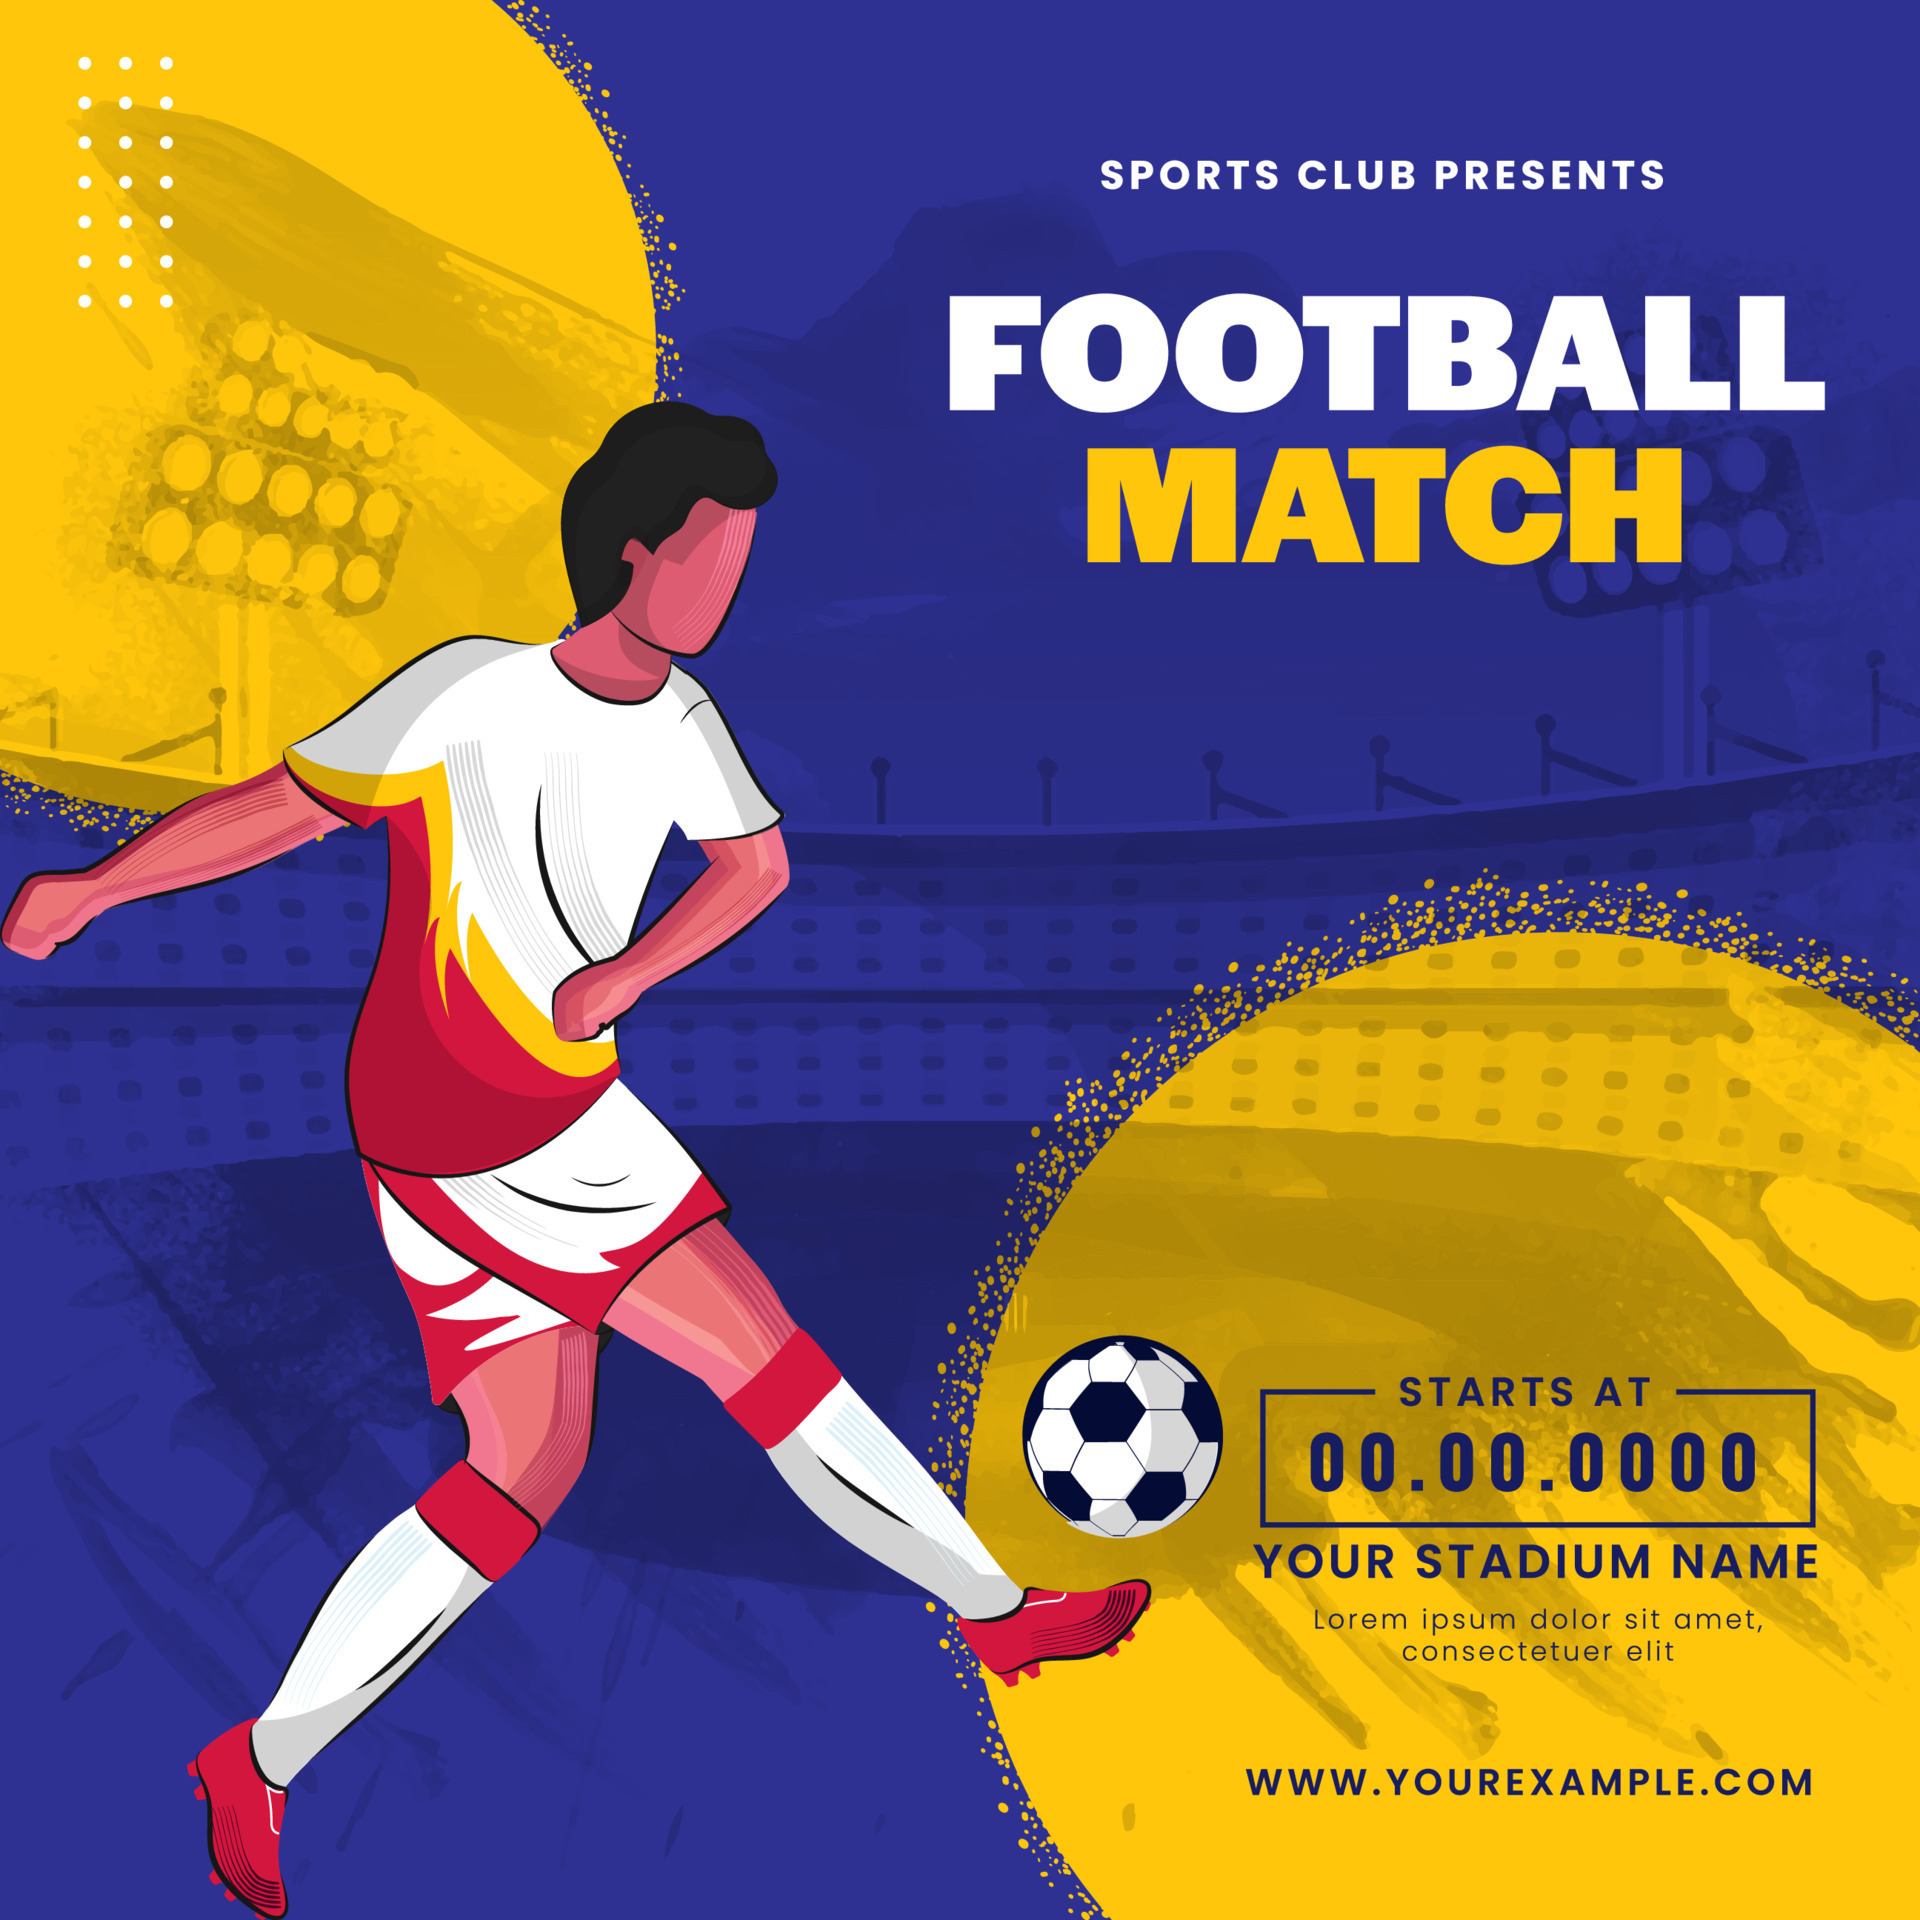 Football Match Poster Design With Faceless Footballer Player